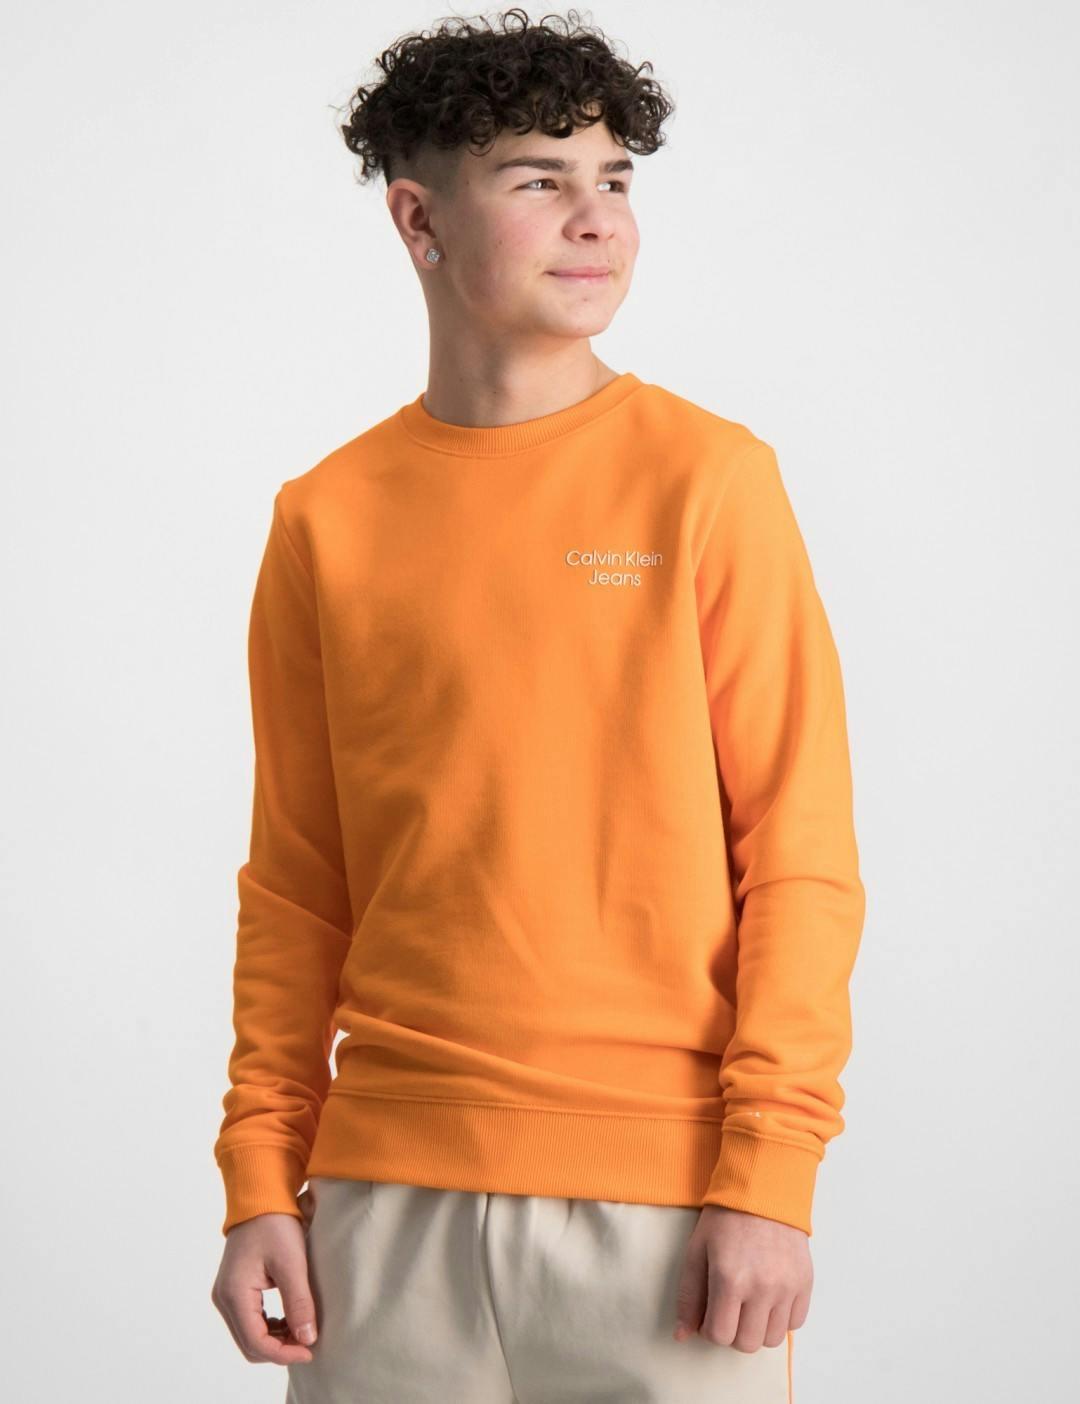 Store Brand STACK Orange för Kids LOGO Kille | CKJ SWEATSHIRT